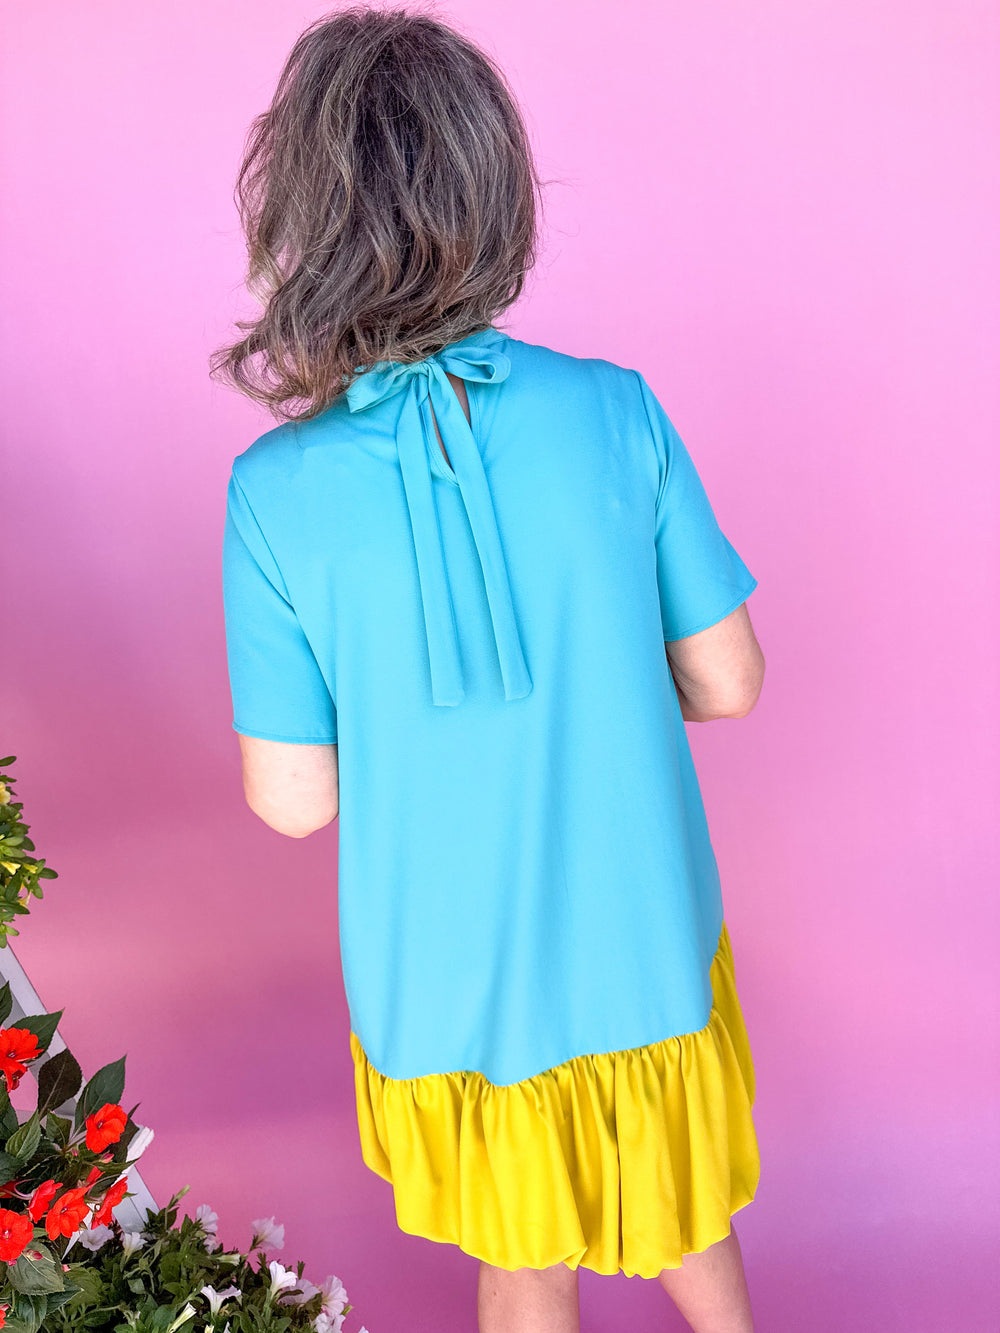 Around The Block Dress - Turquoise/Kiwi